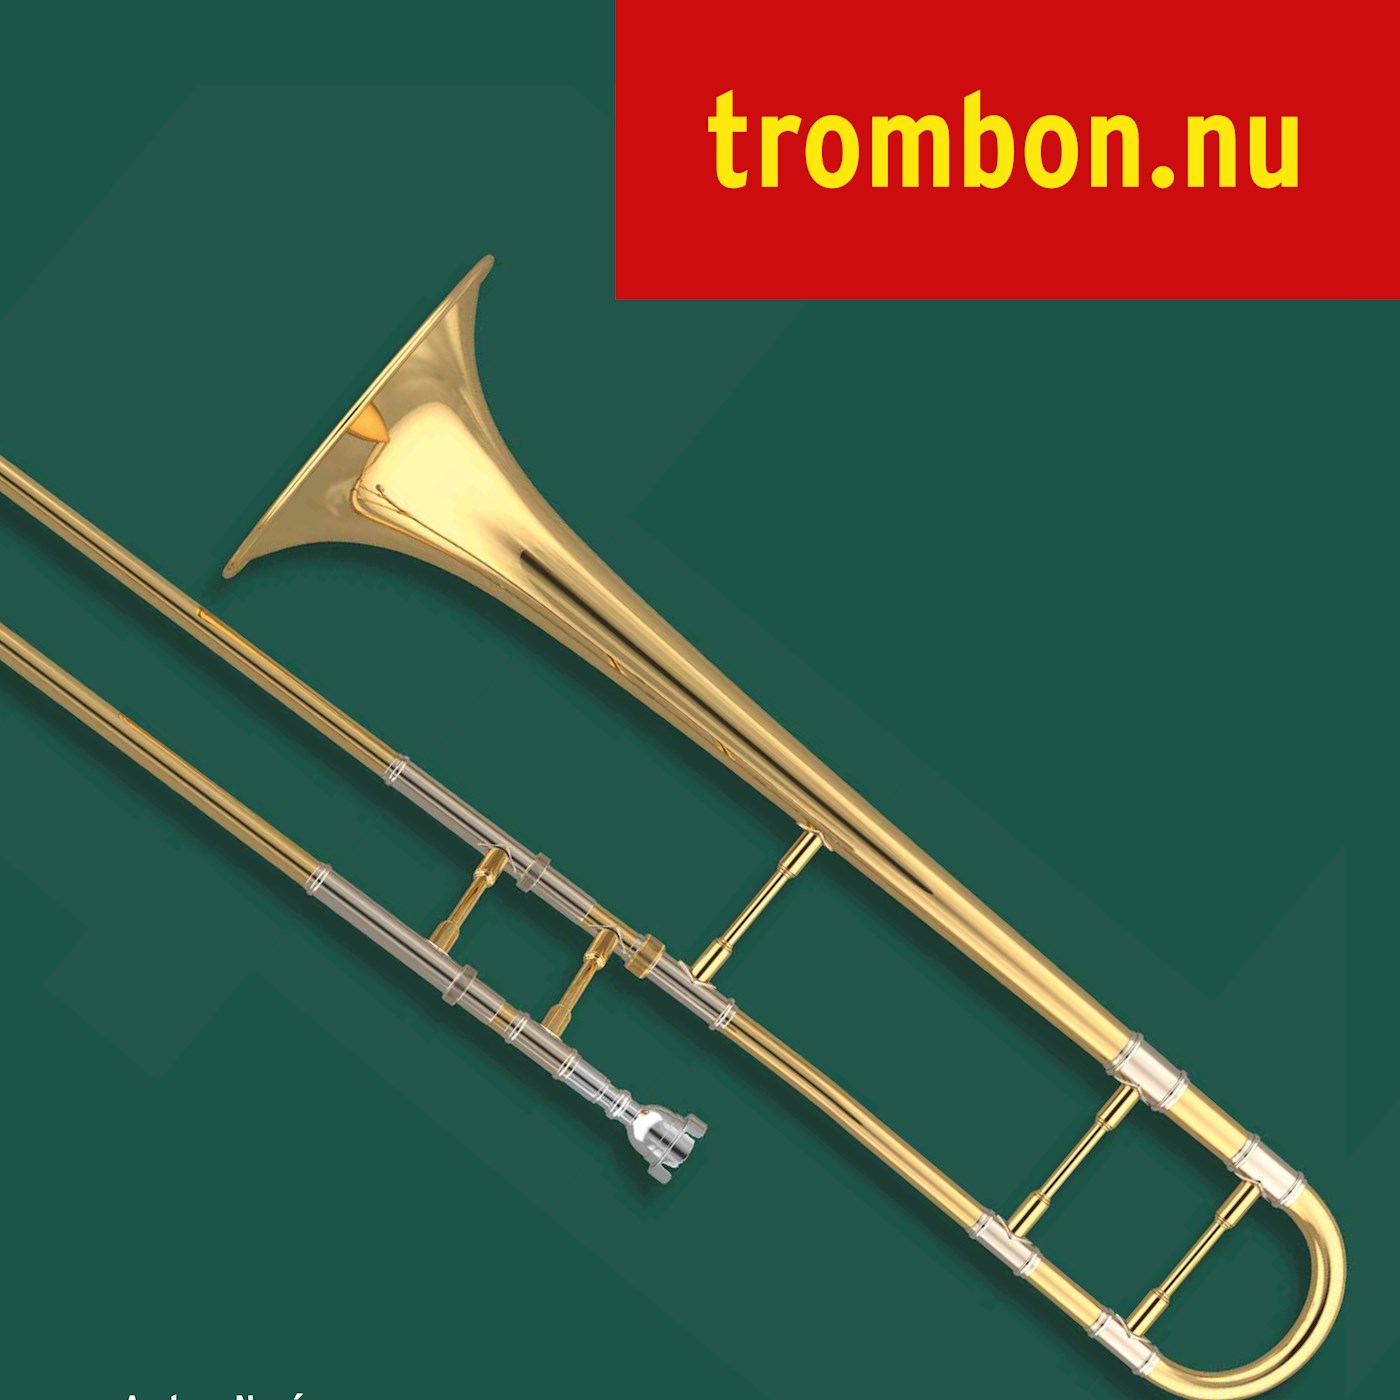 trombon.nu 1